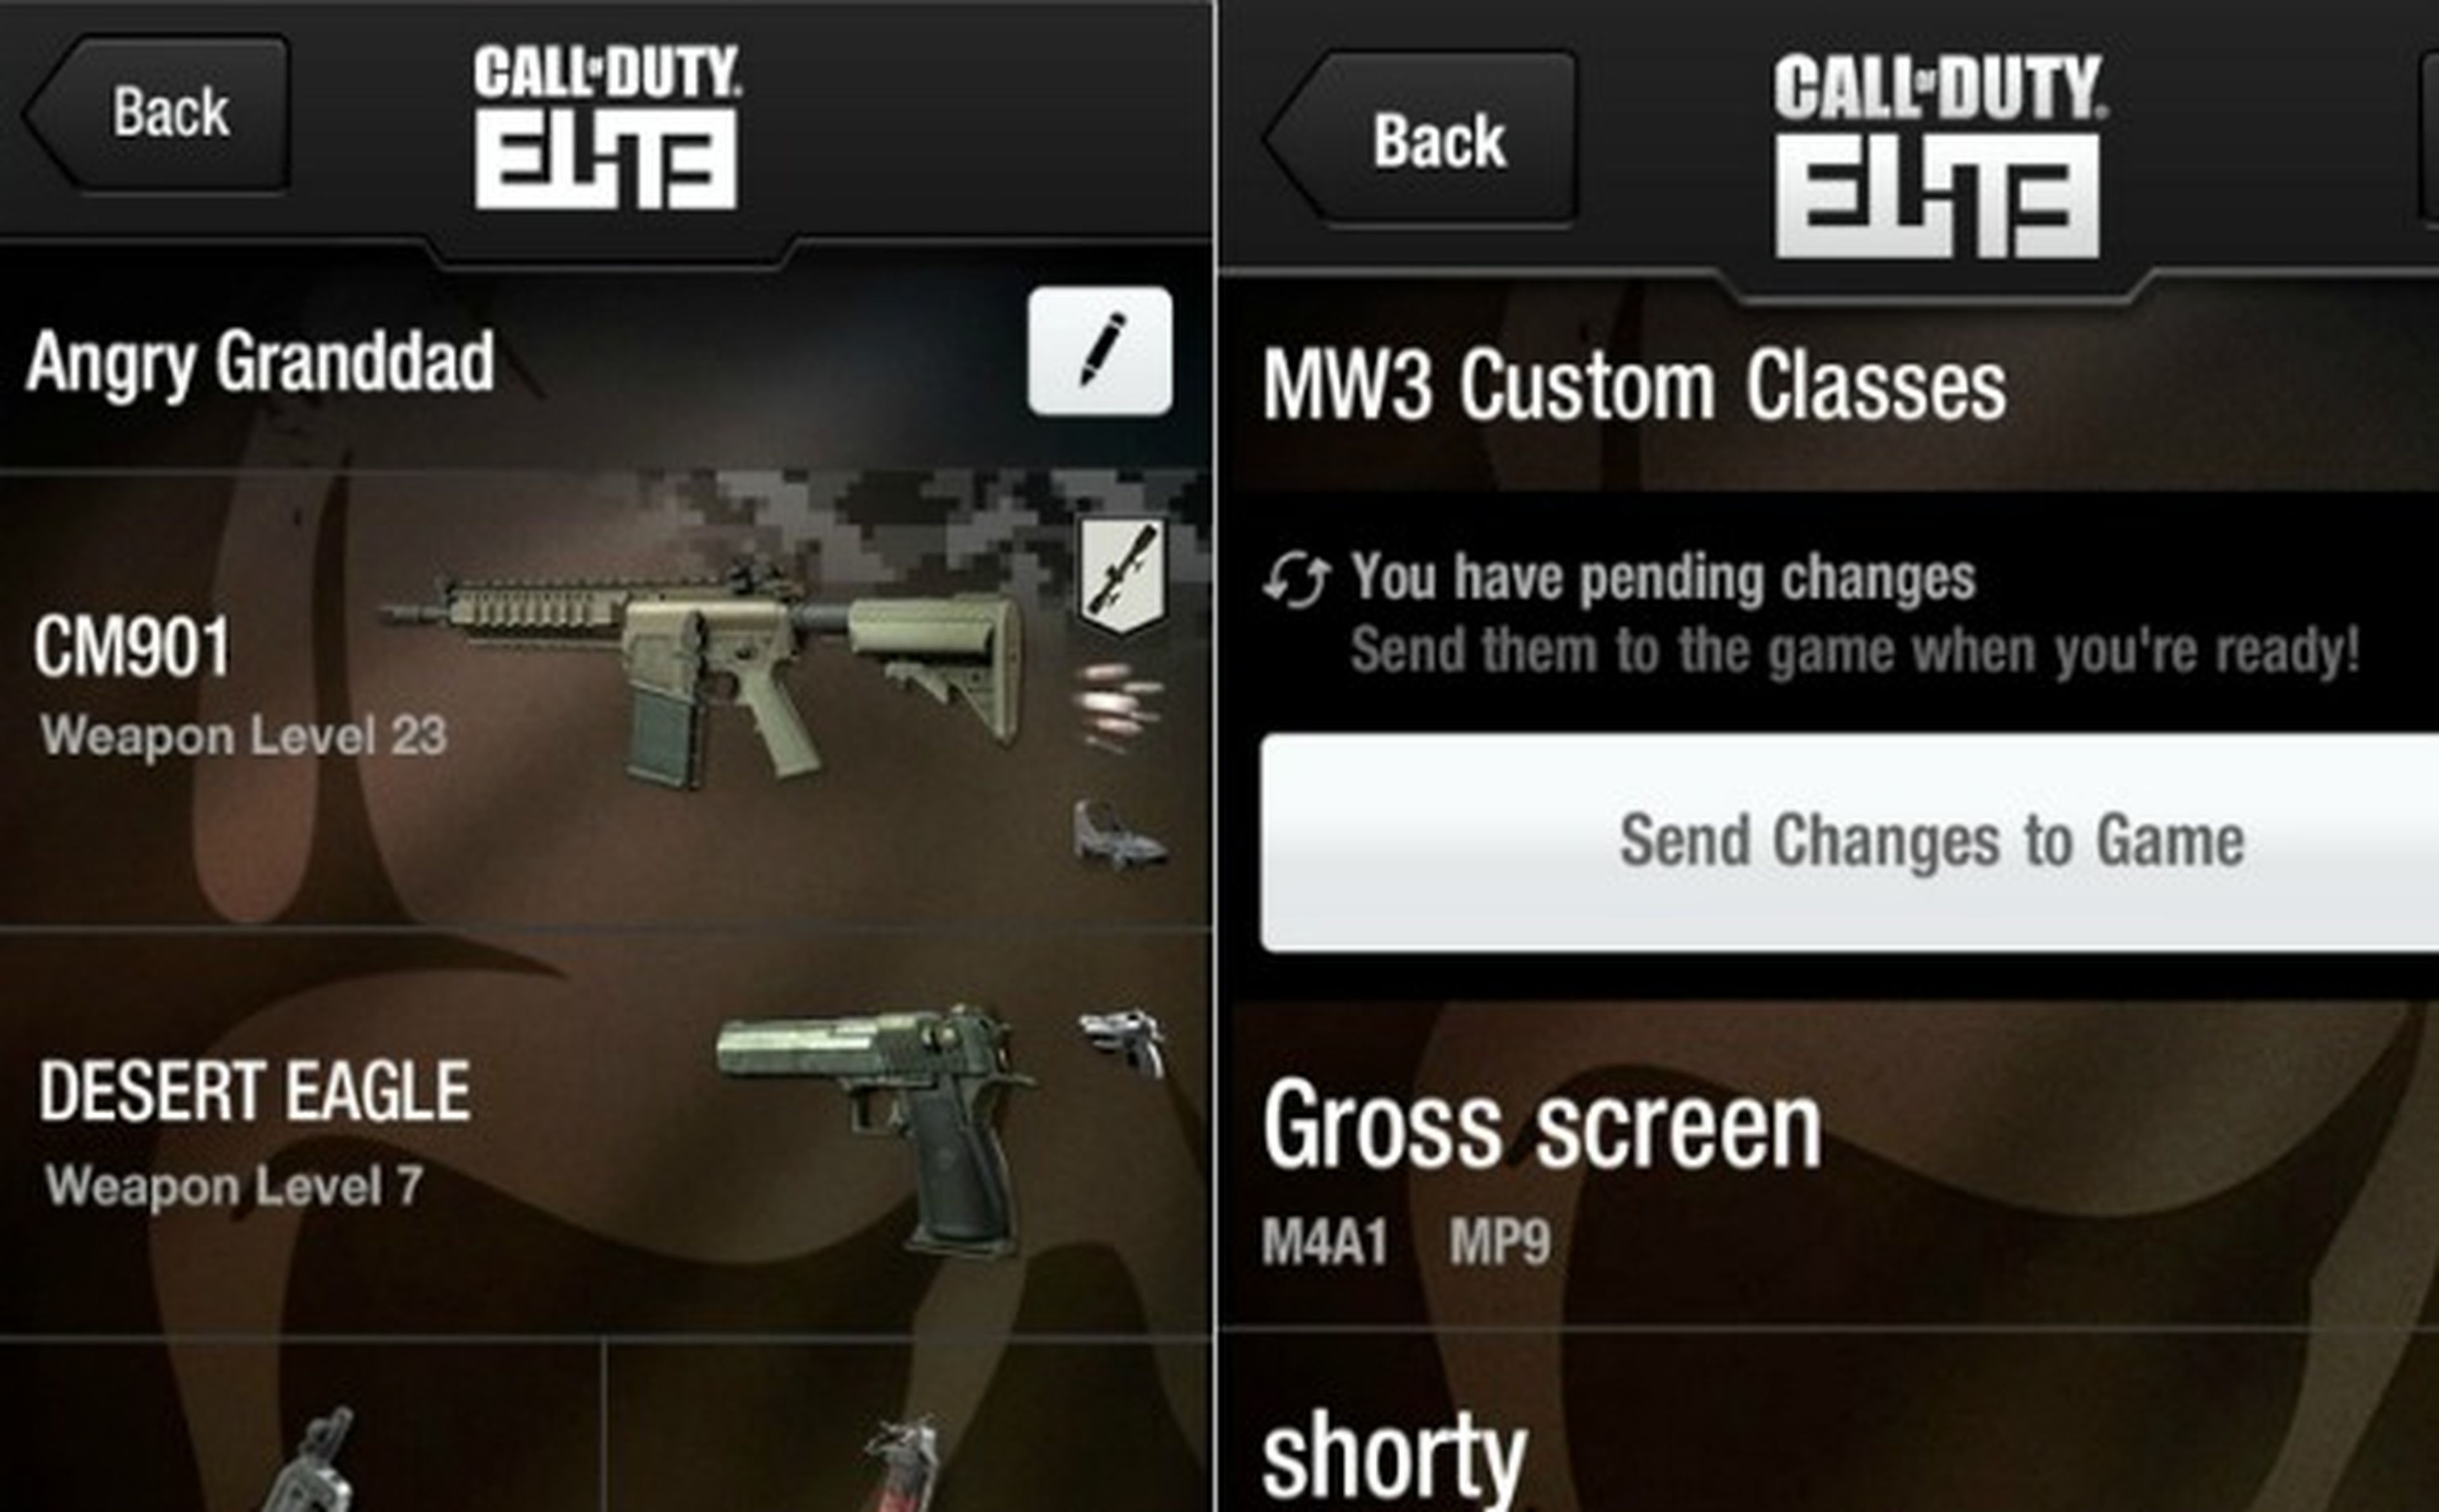 Call of Duty Elite llega al iPhone